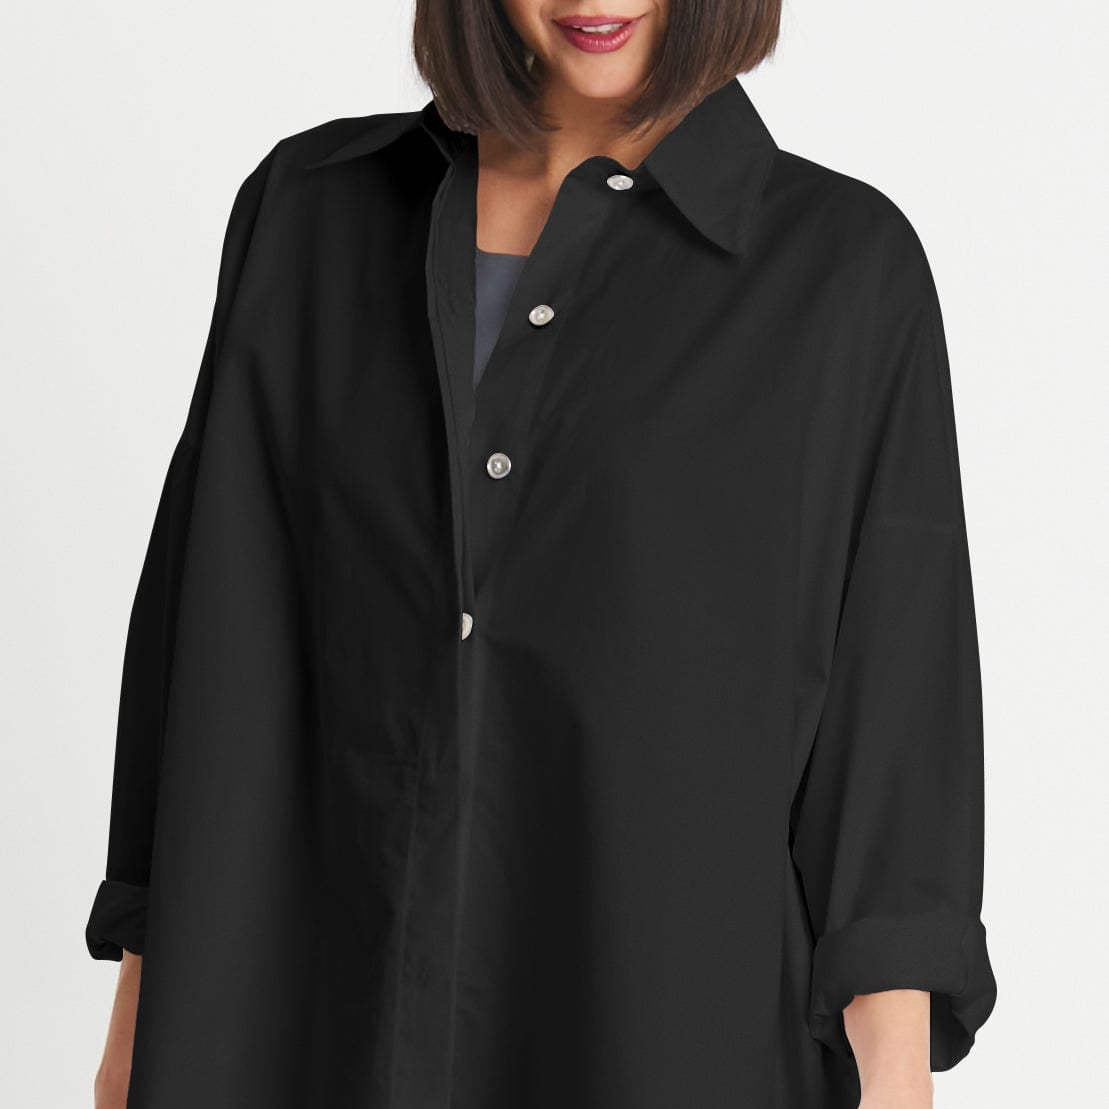 PLANET by Lauren G Women's Shirts & Tops Black / One Size E-Z Shirt